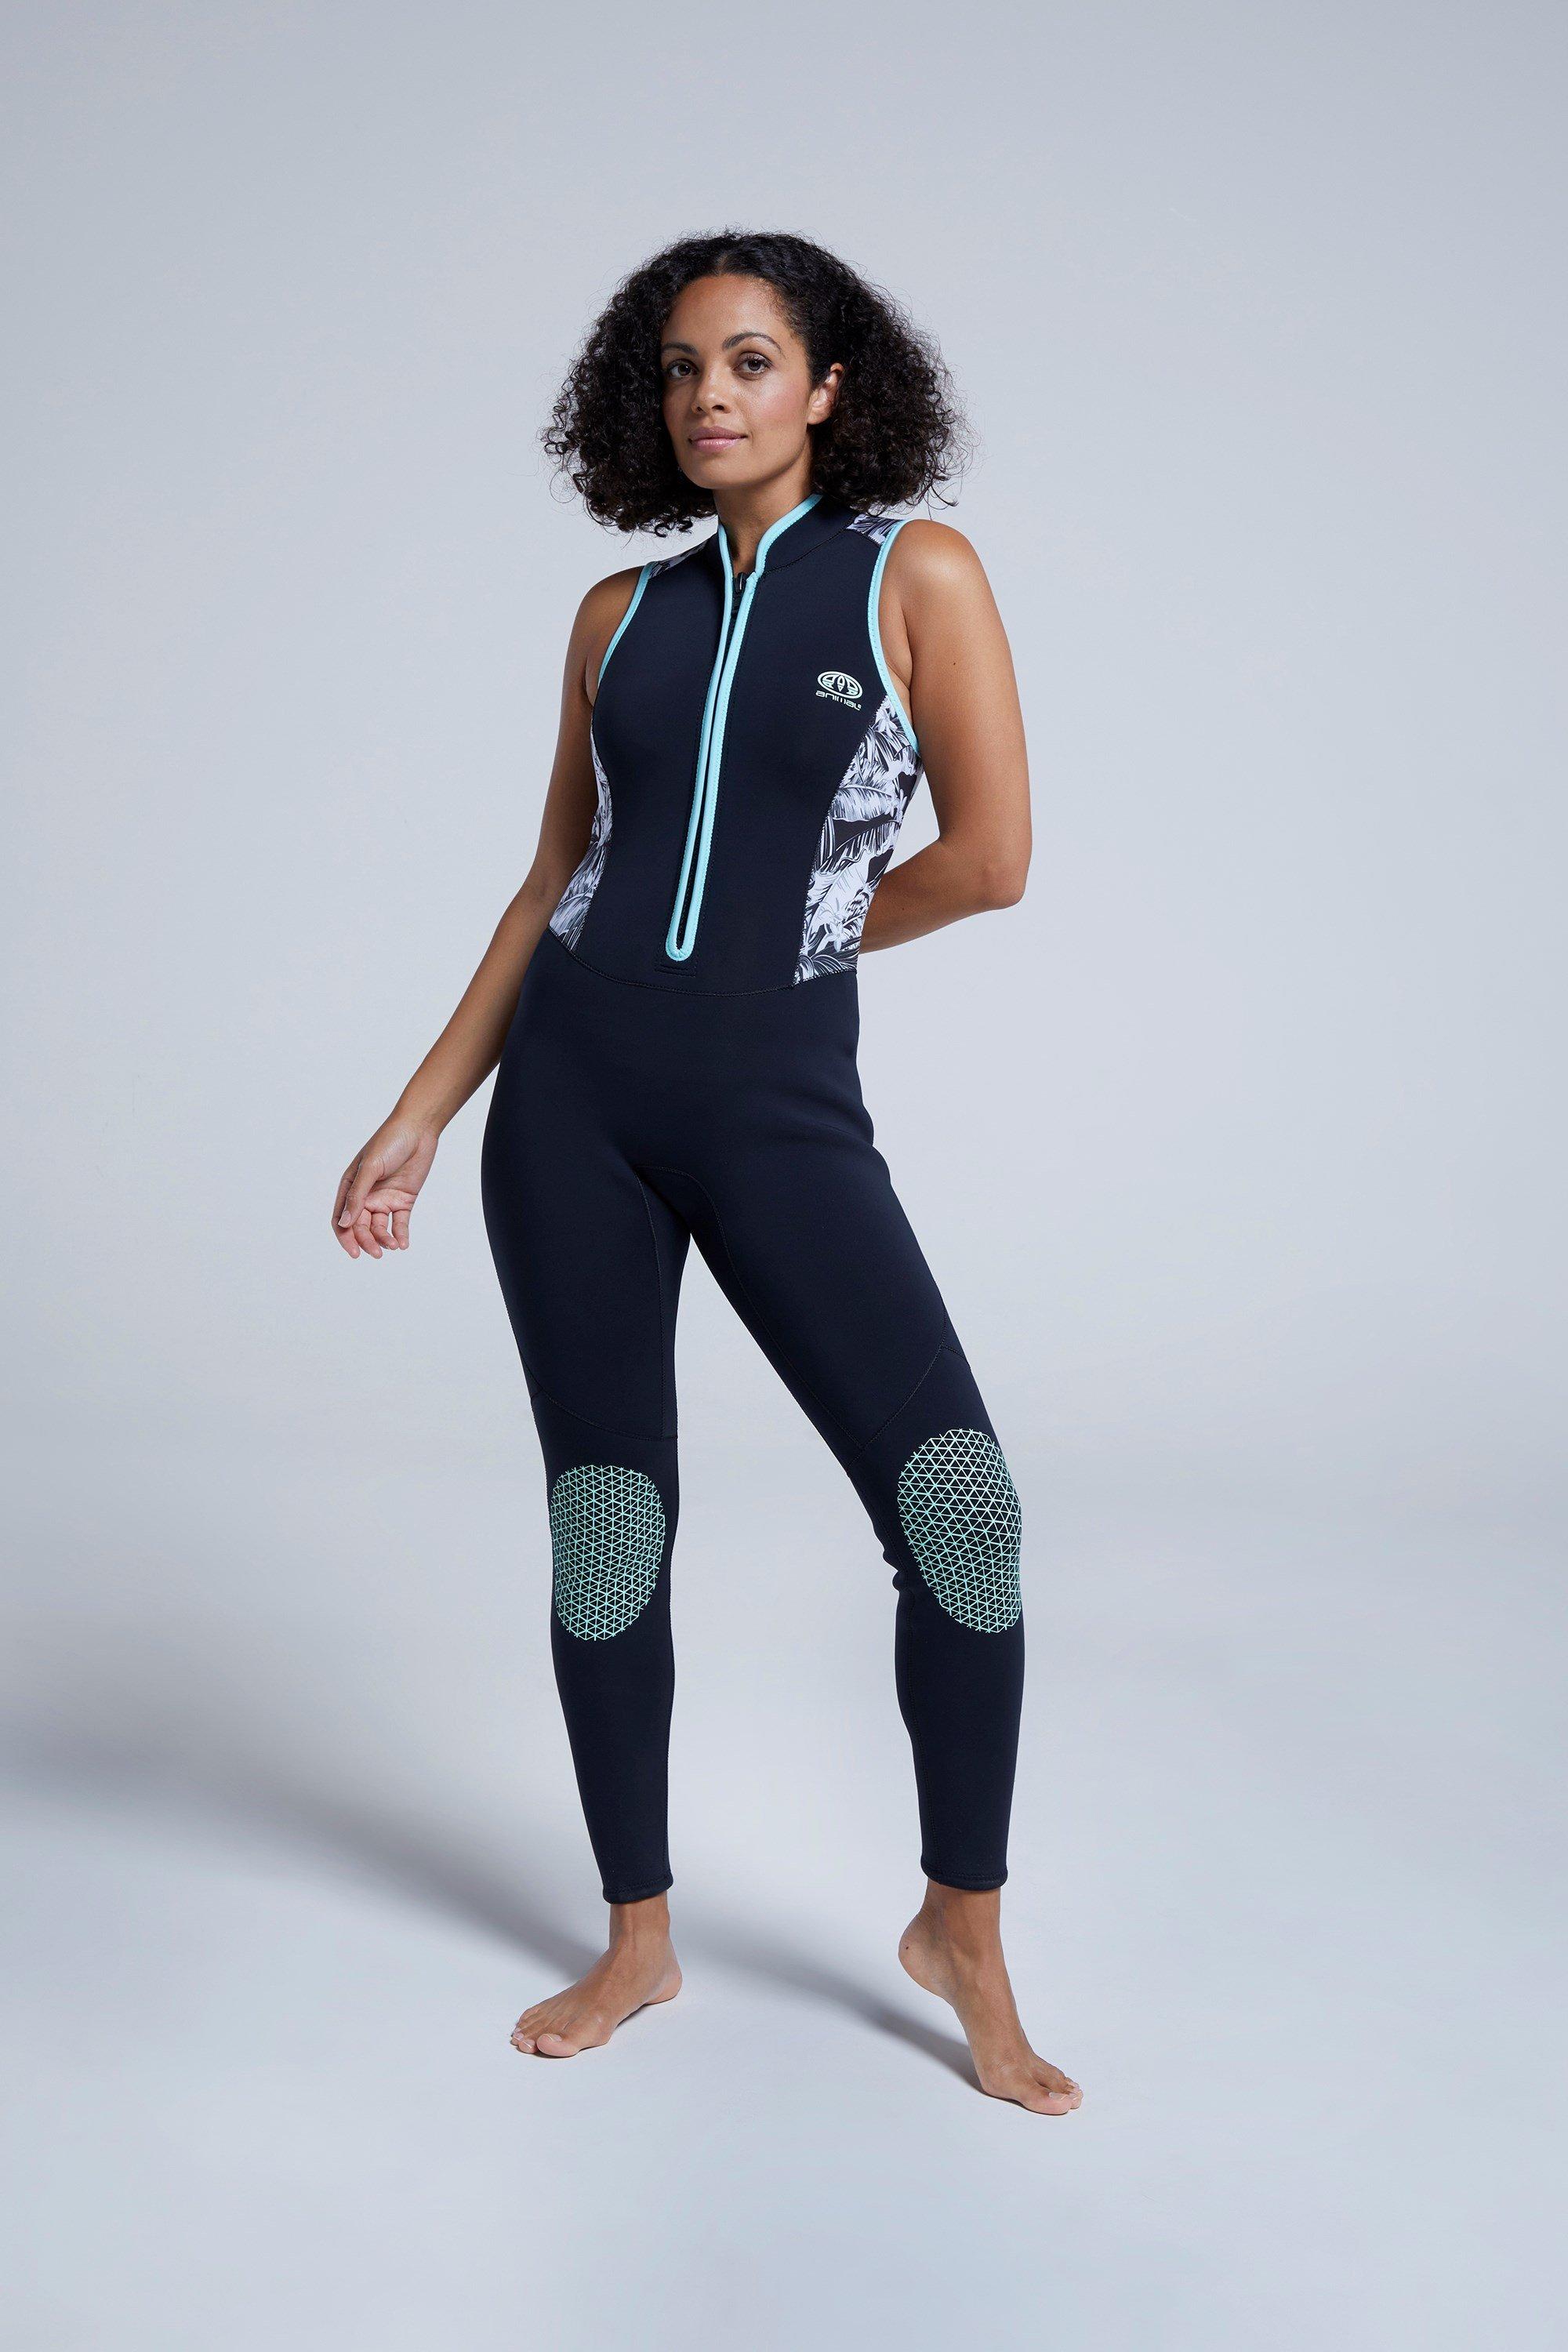 Madison Long Jane  Front Zip Wetsuit  Soft Flexible Swimwear